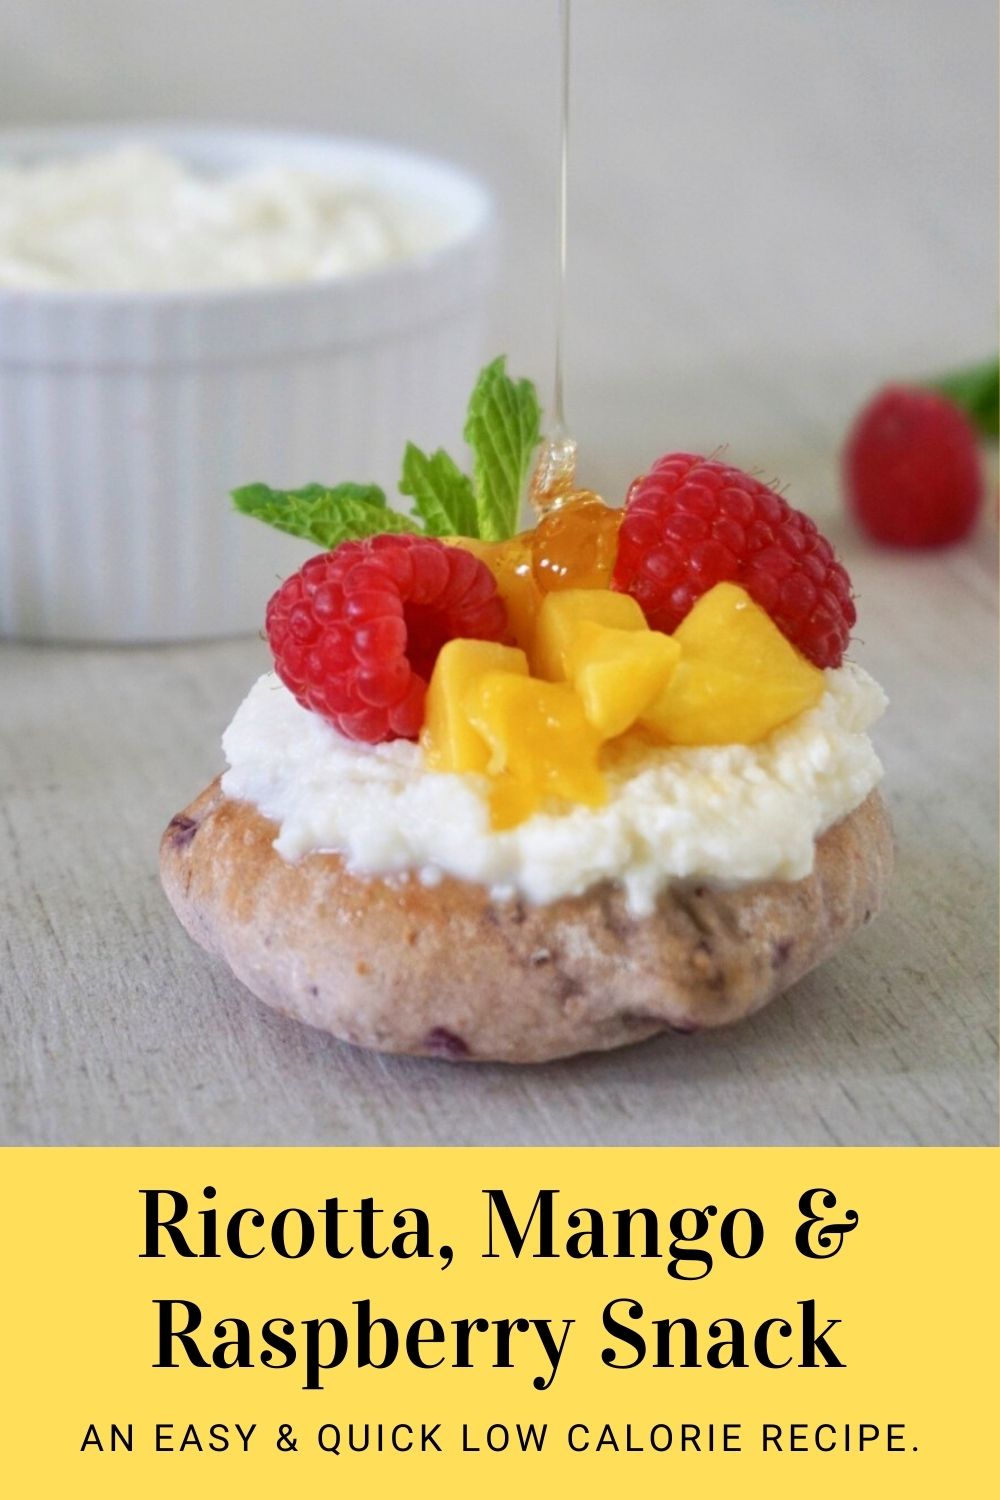 Ricotta Toast with Raspberry & Mango easy low-calorie snack